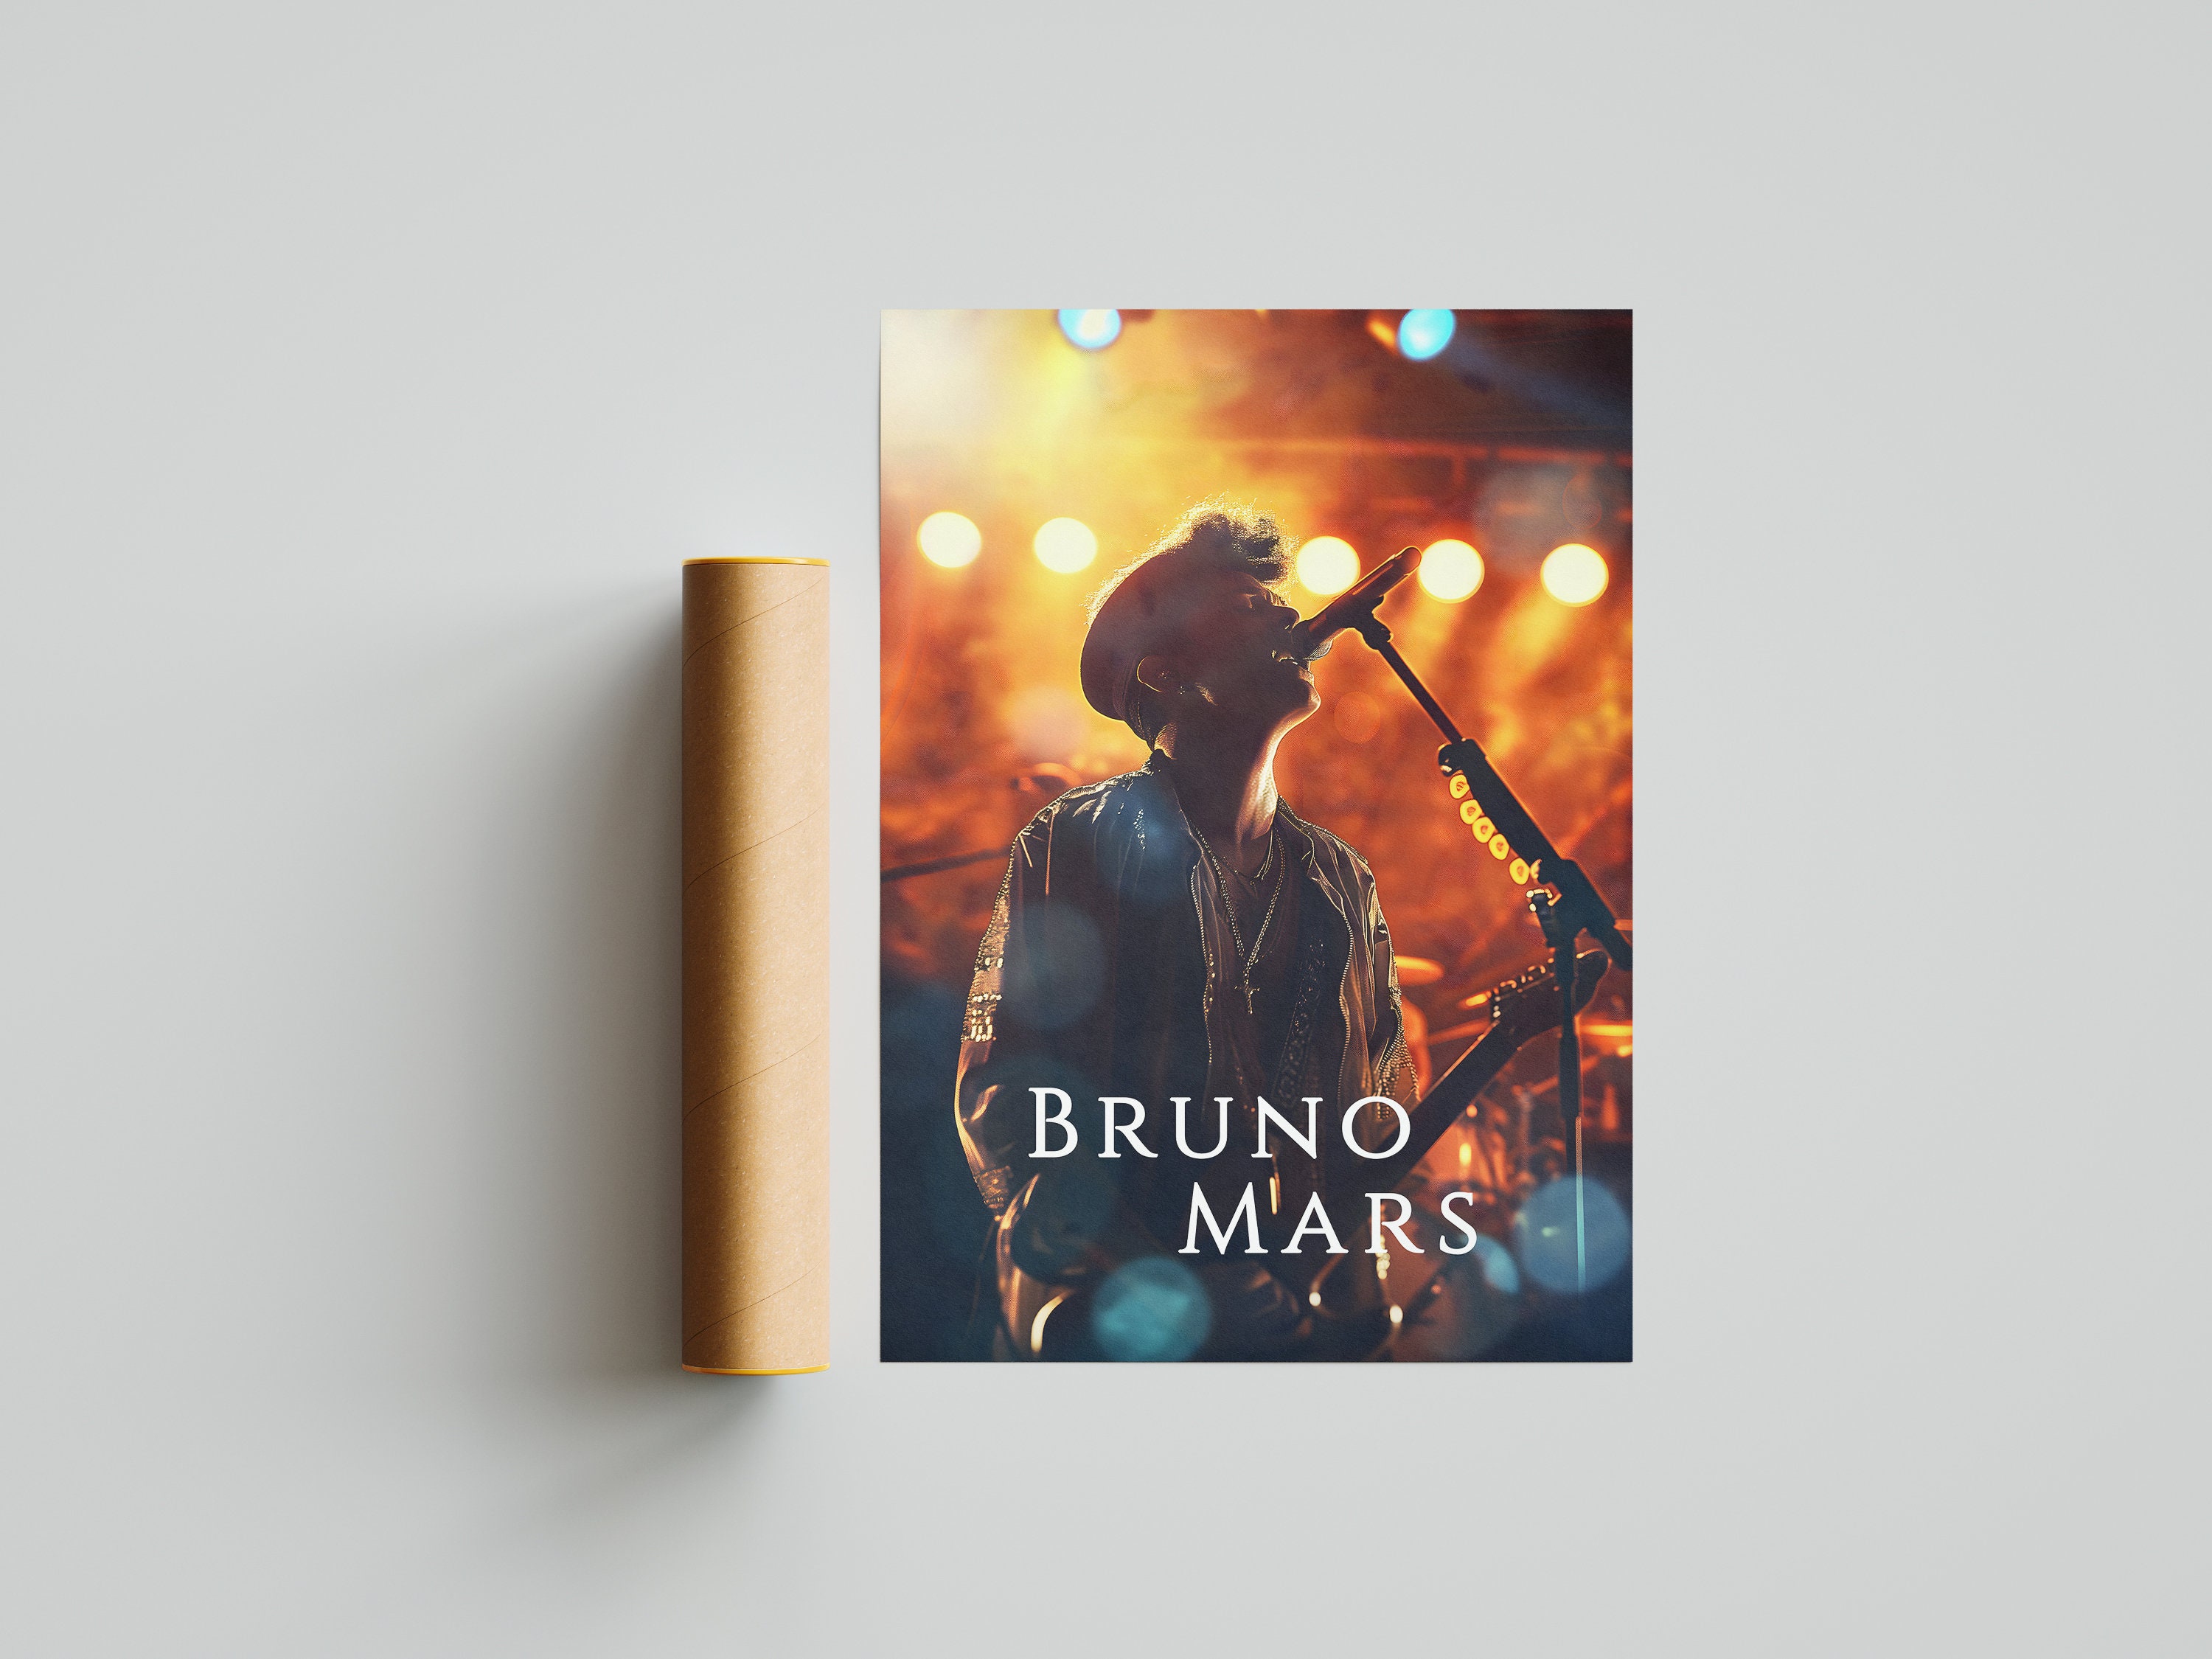 Bruno Mars Poster - Wall Art - Pop Music Poster